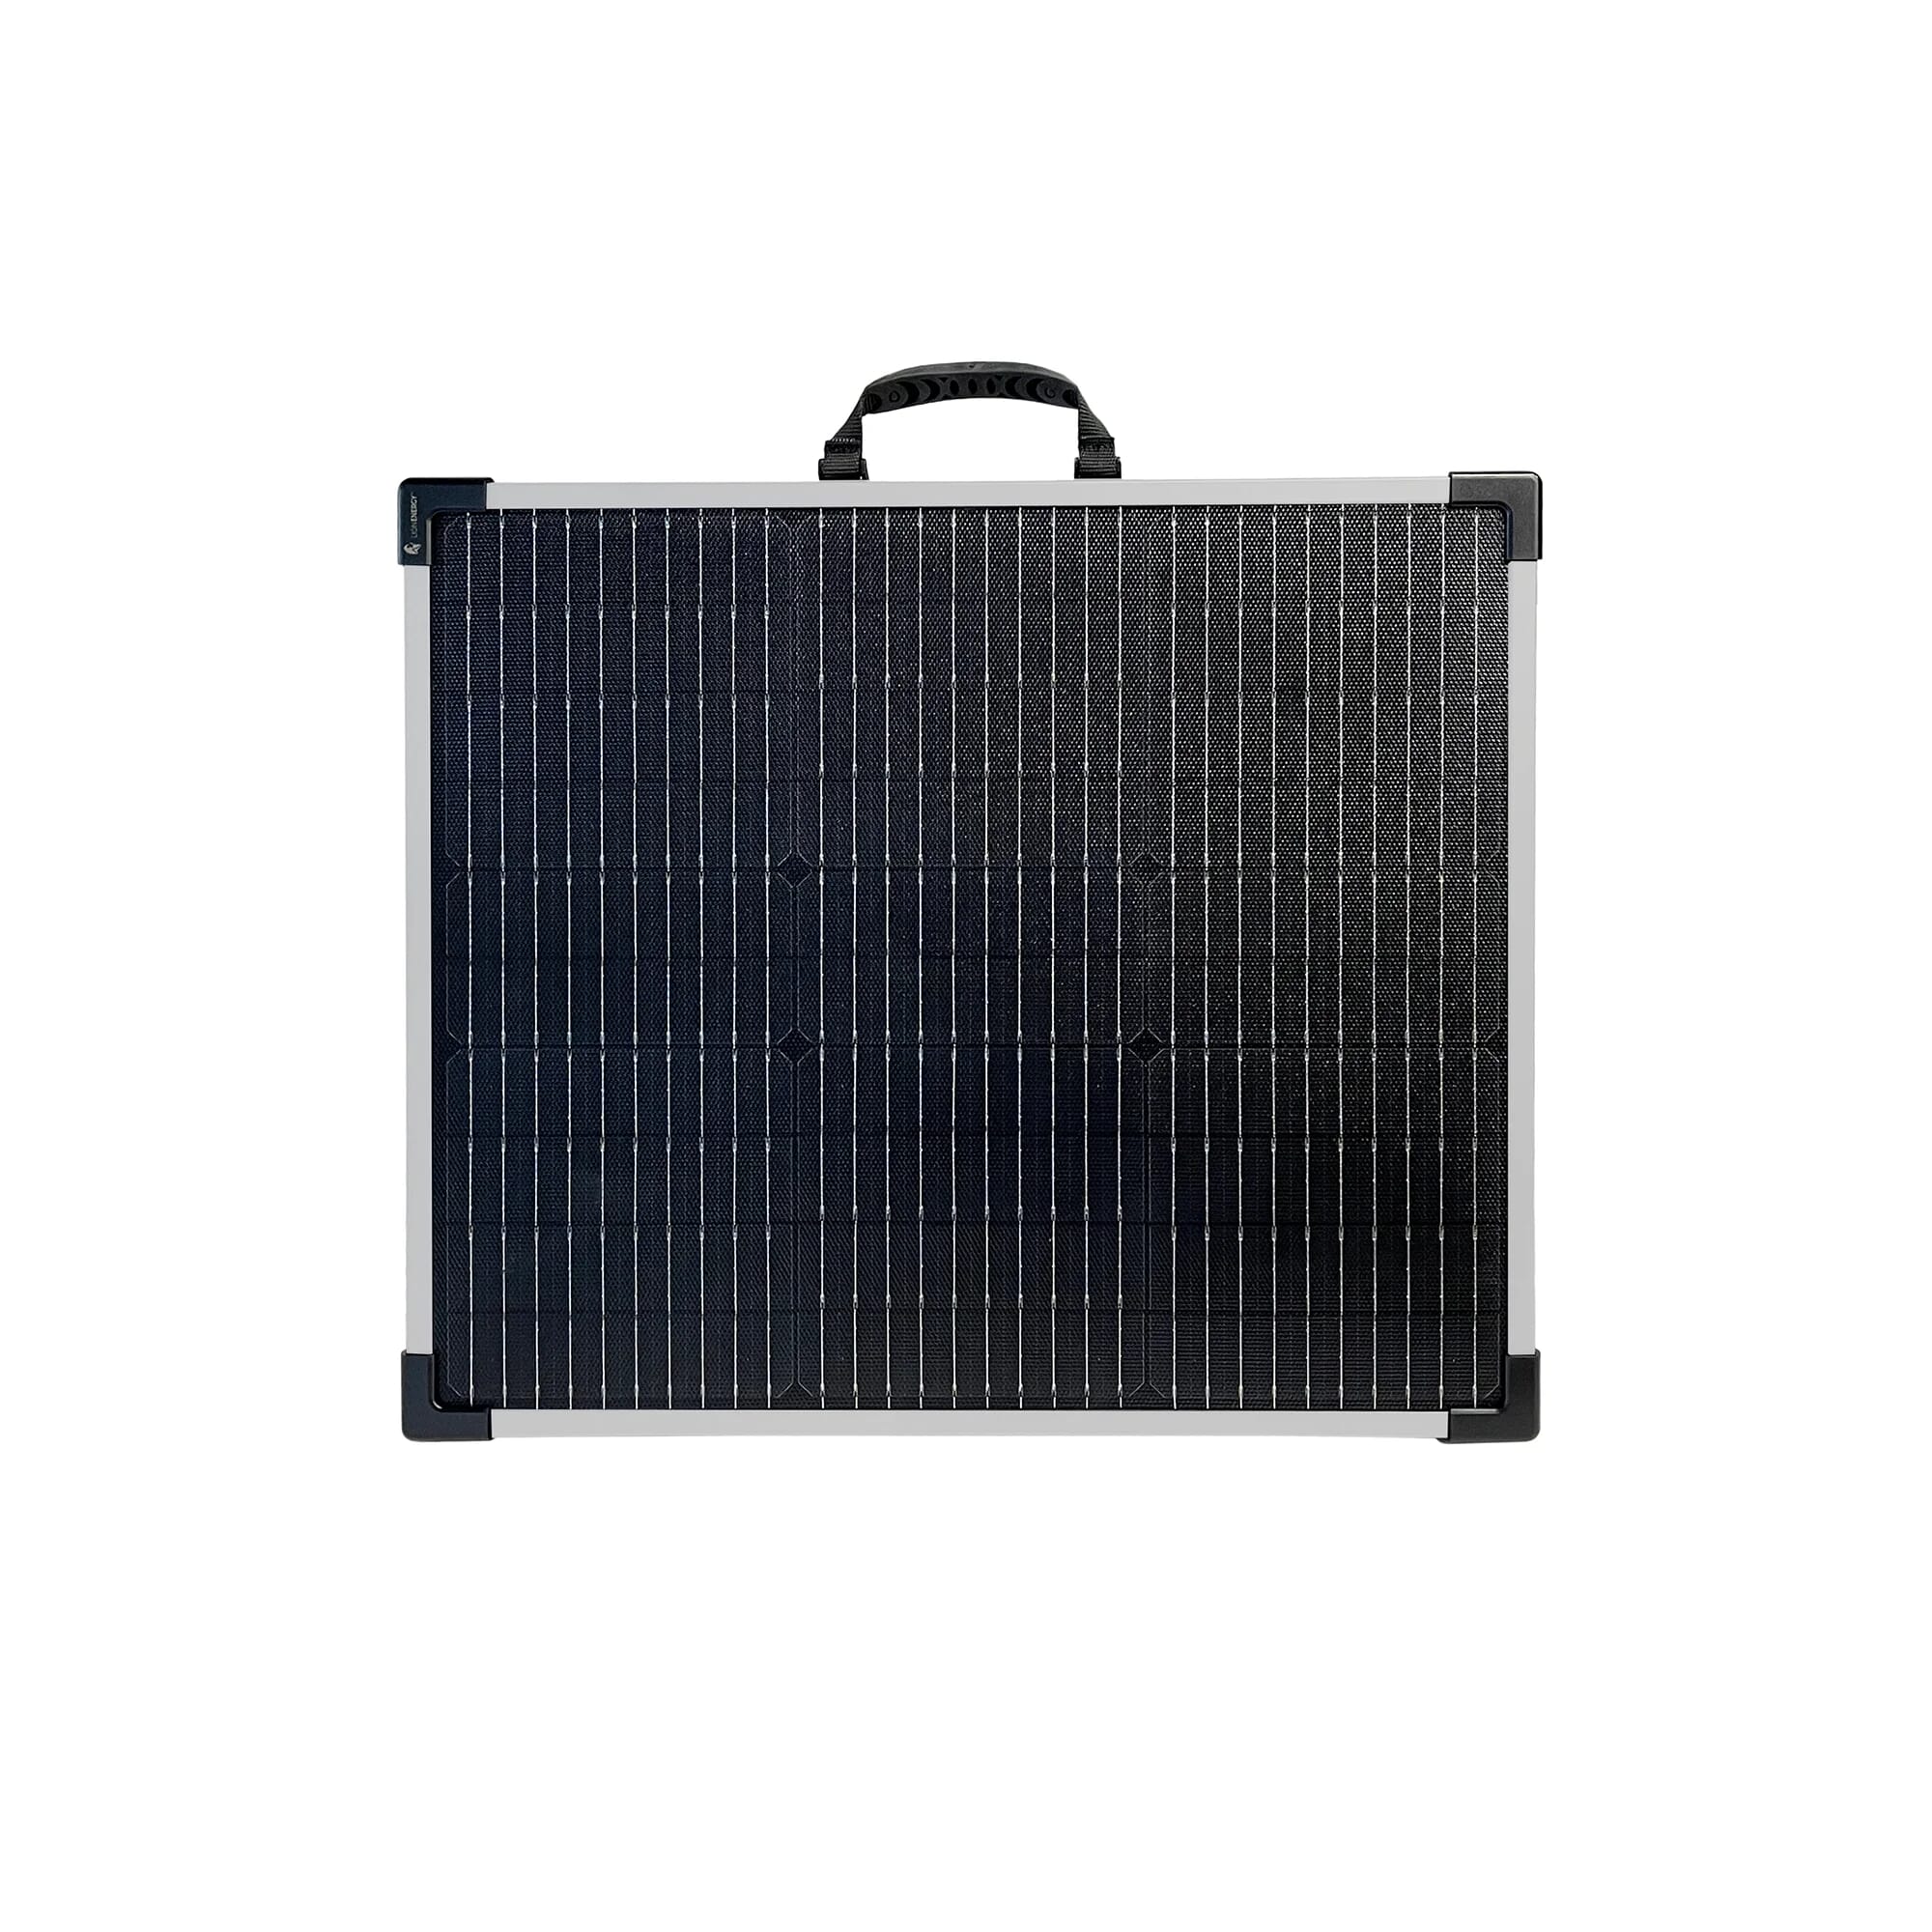 Lion Energy 100W LW 12V Solar Panel